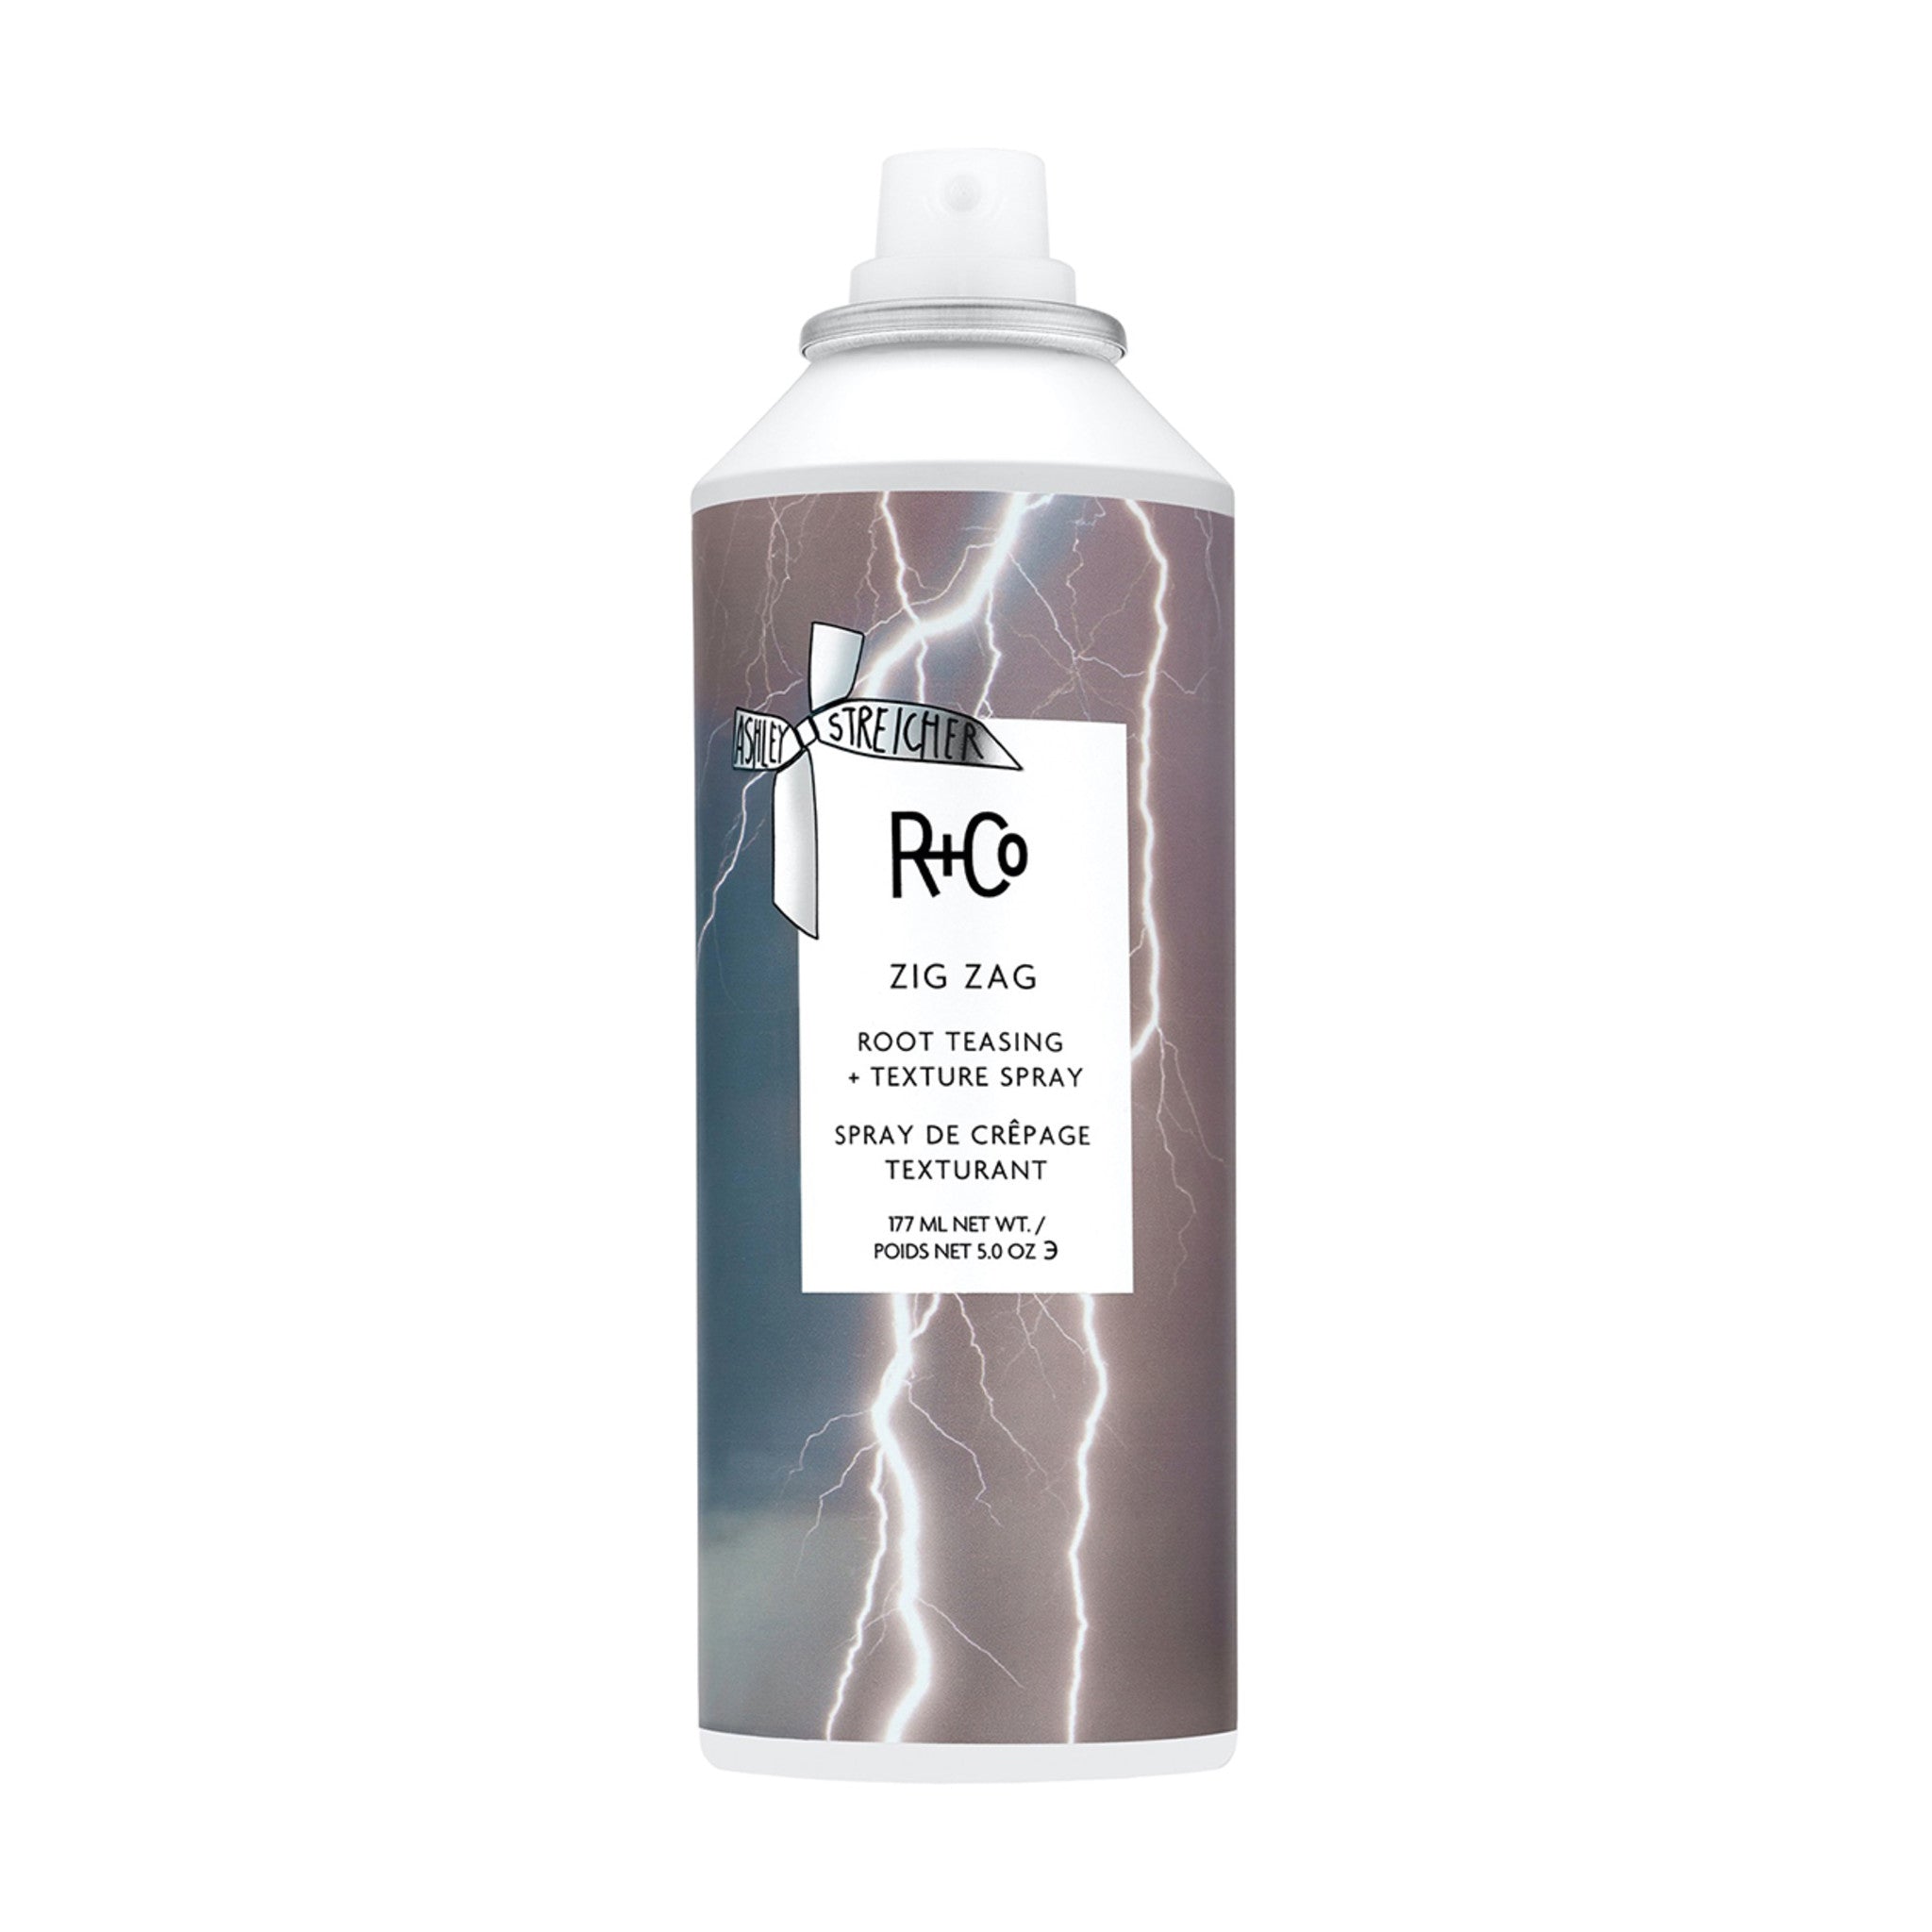 R+Co Zig Zag Root Teasing Spray Size variant: main image.